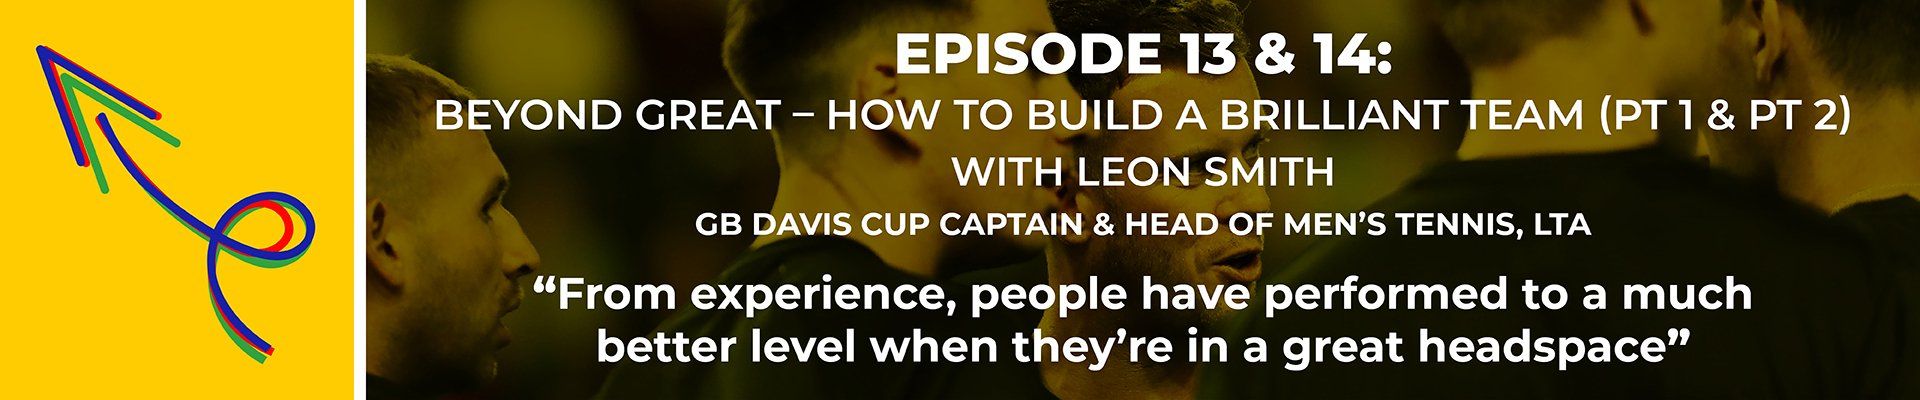 Leon Smith GB Davis Cup Captain shares how to build a brilliant team